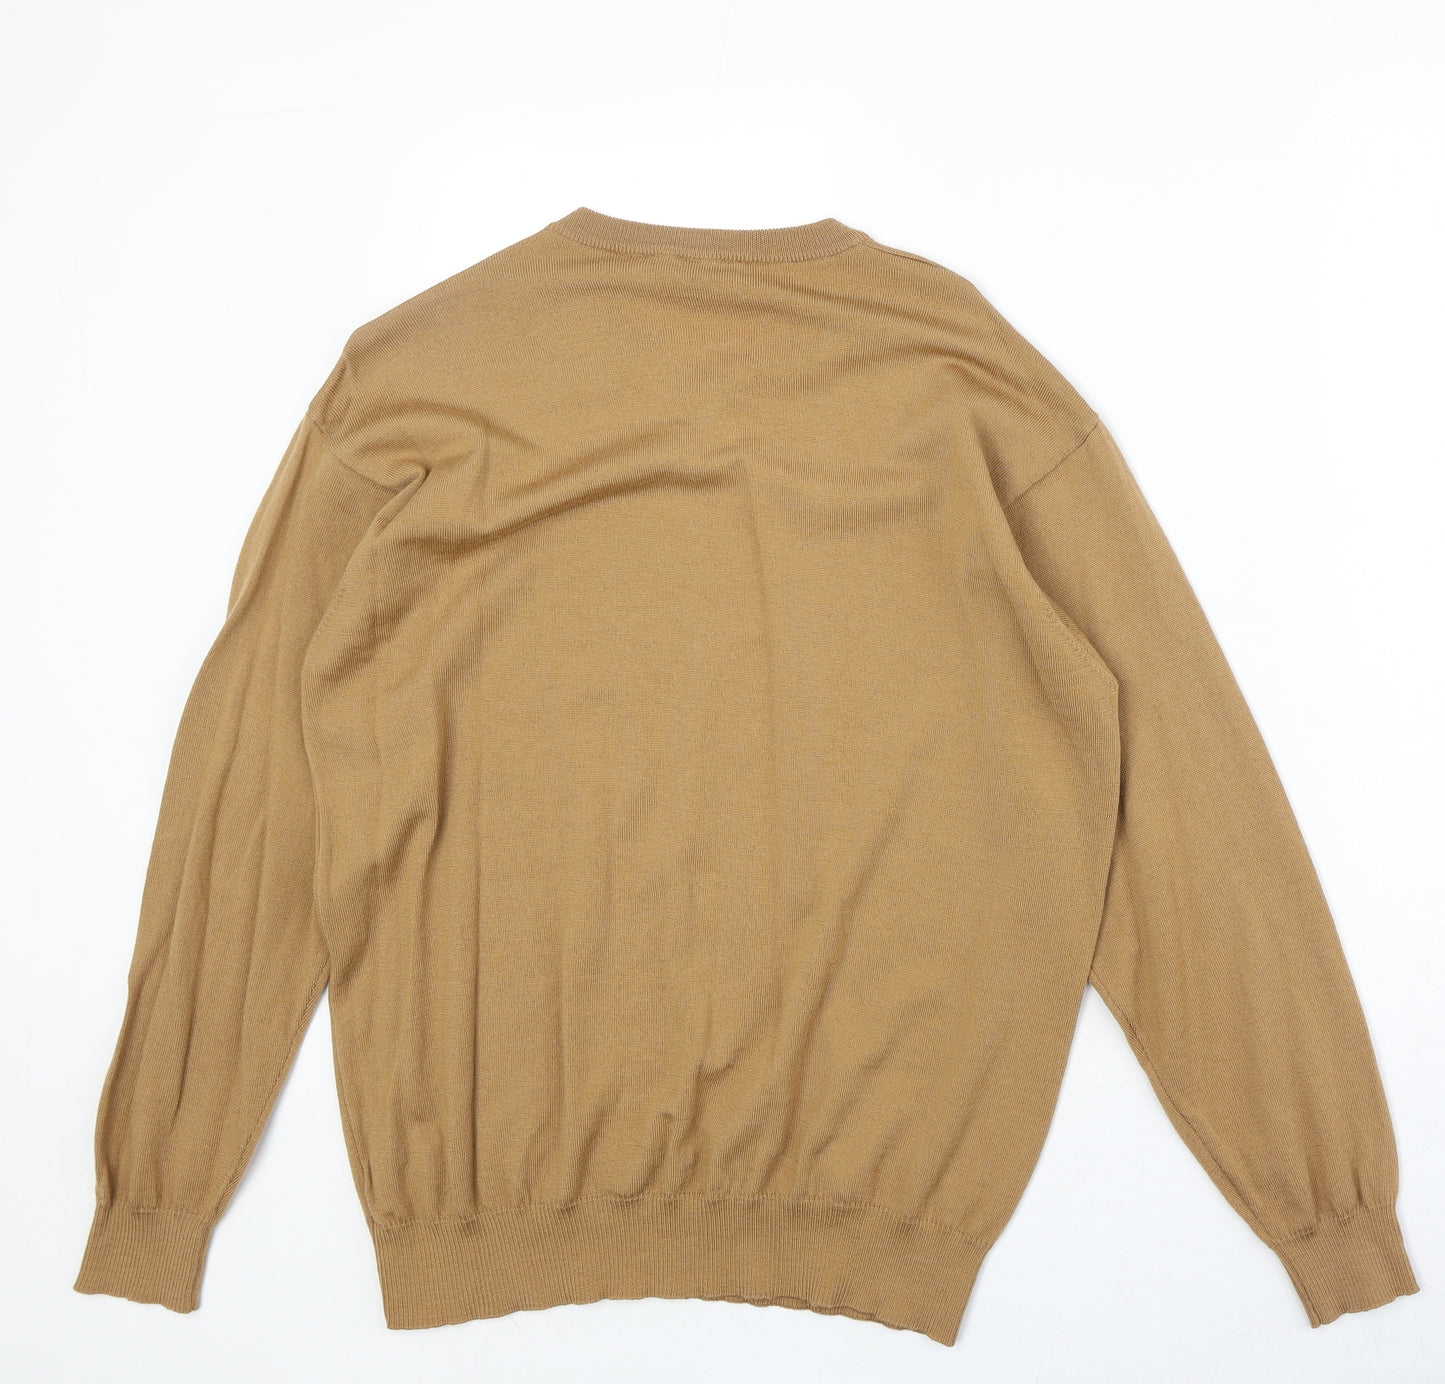 Brian Scott Mens Brown V-Neck Wool Pullover Jumper Size L Long Sleeve